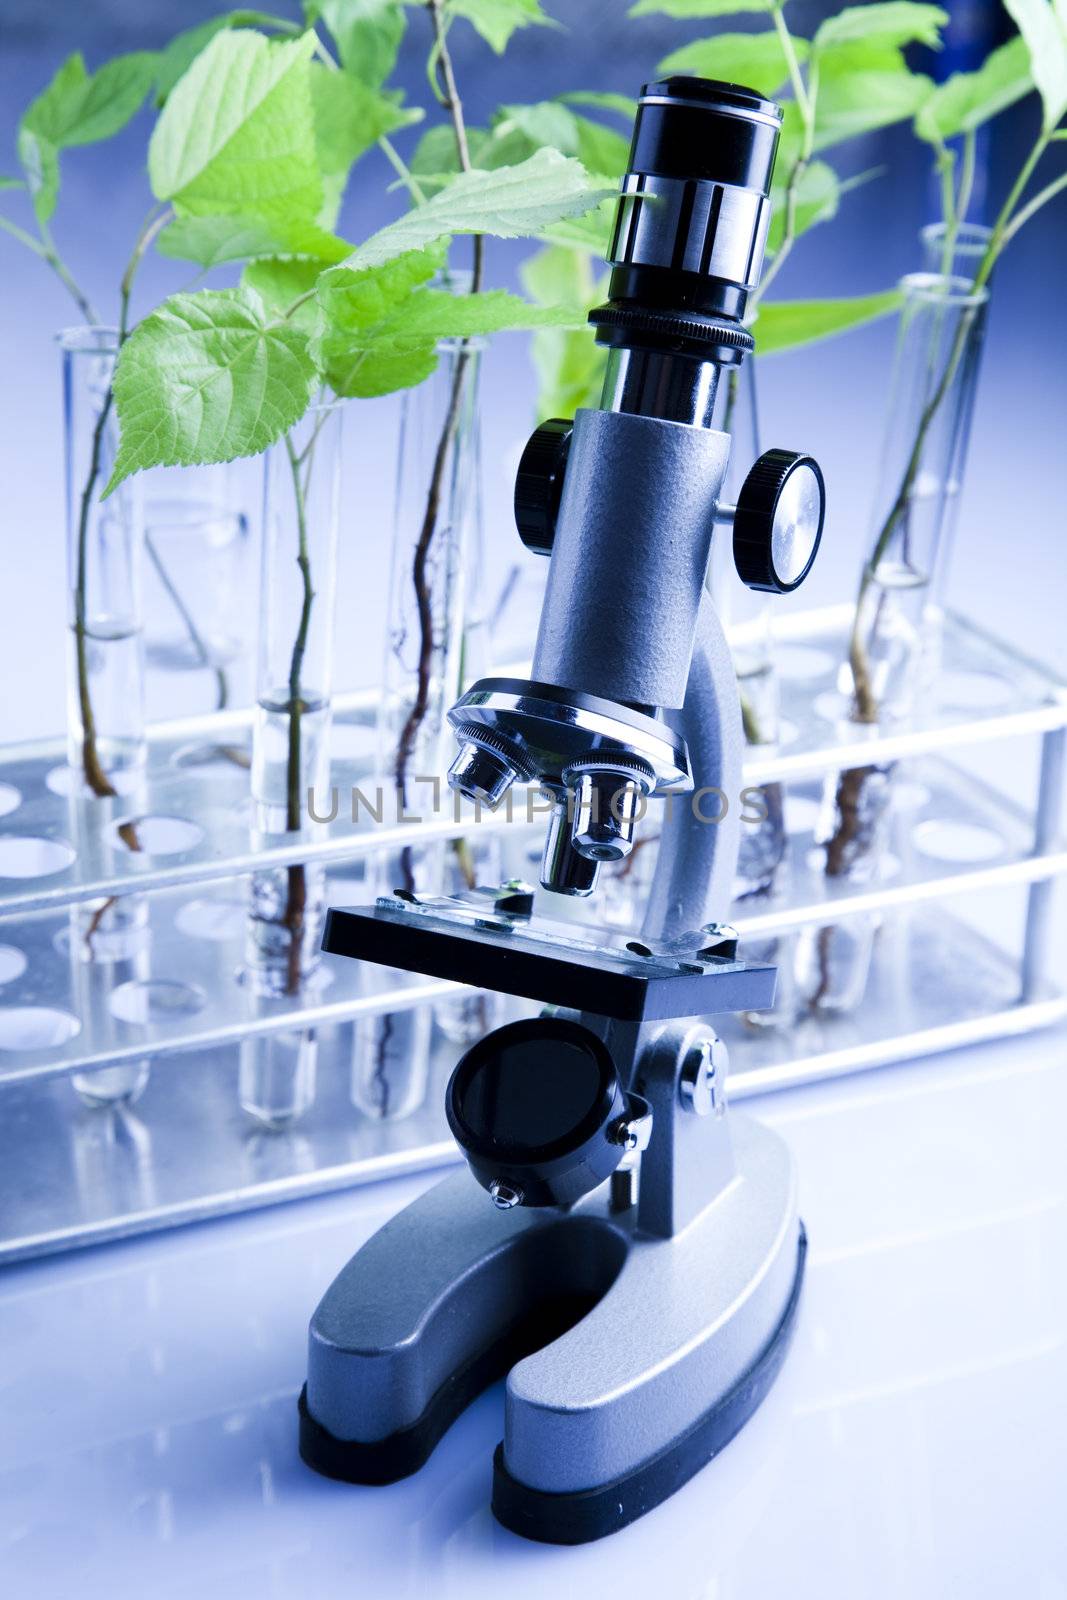 Plants  and laboratory 